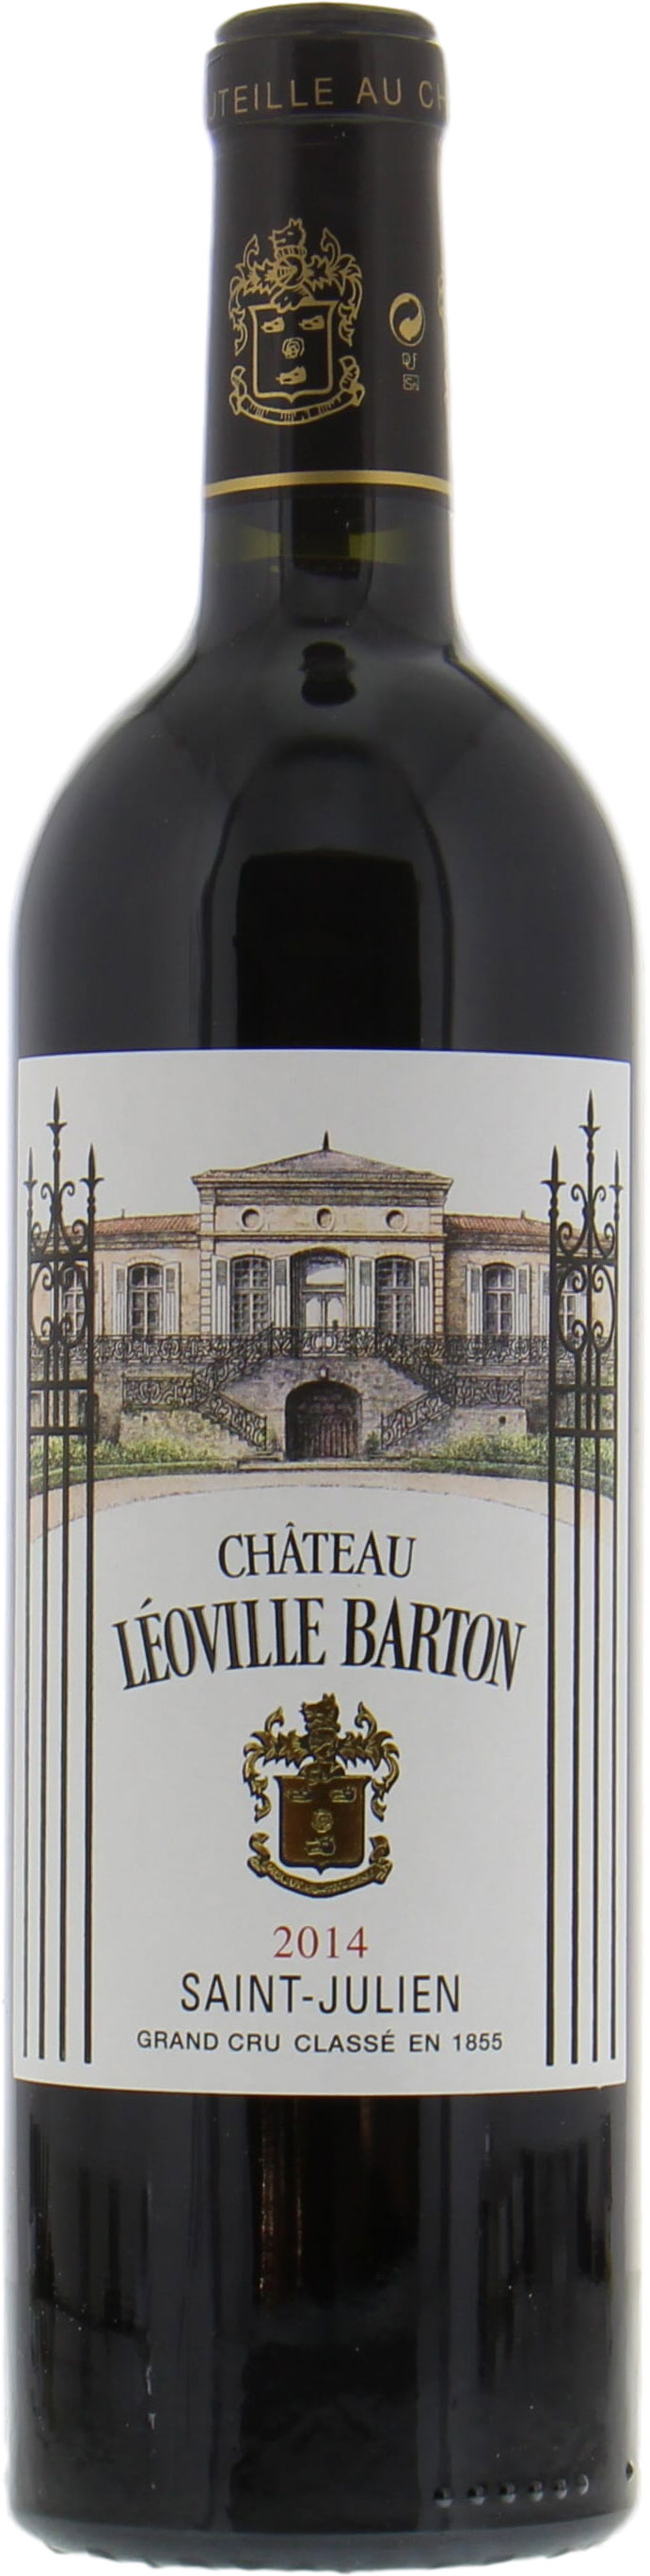 Chateau Leoville Barton 2014 | Buy Online | Best of Wines